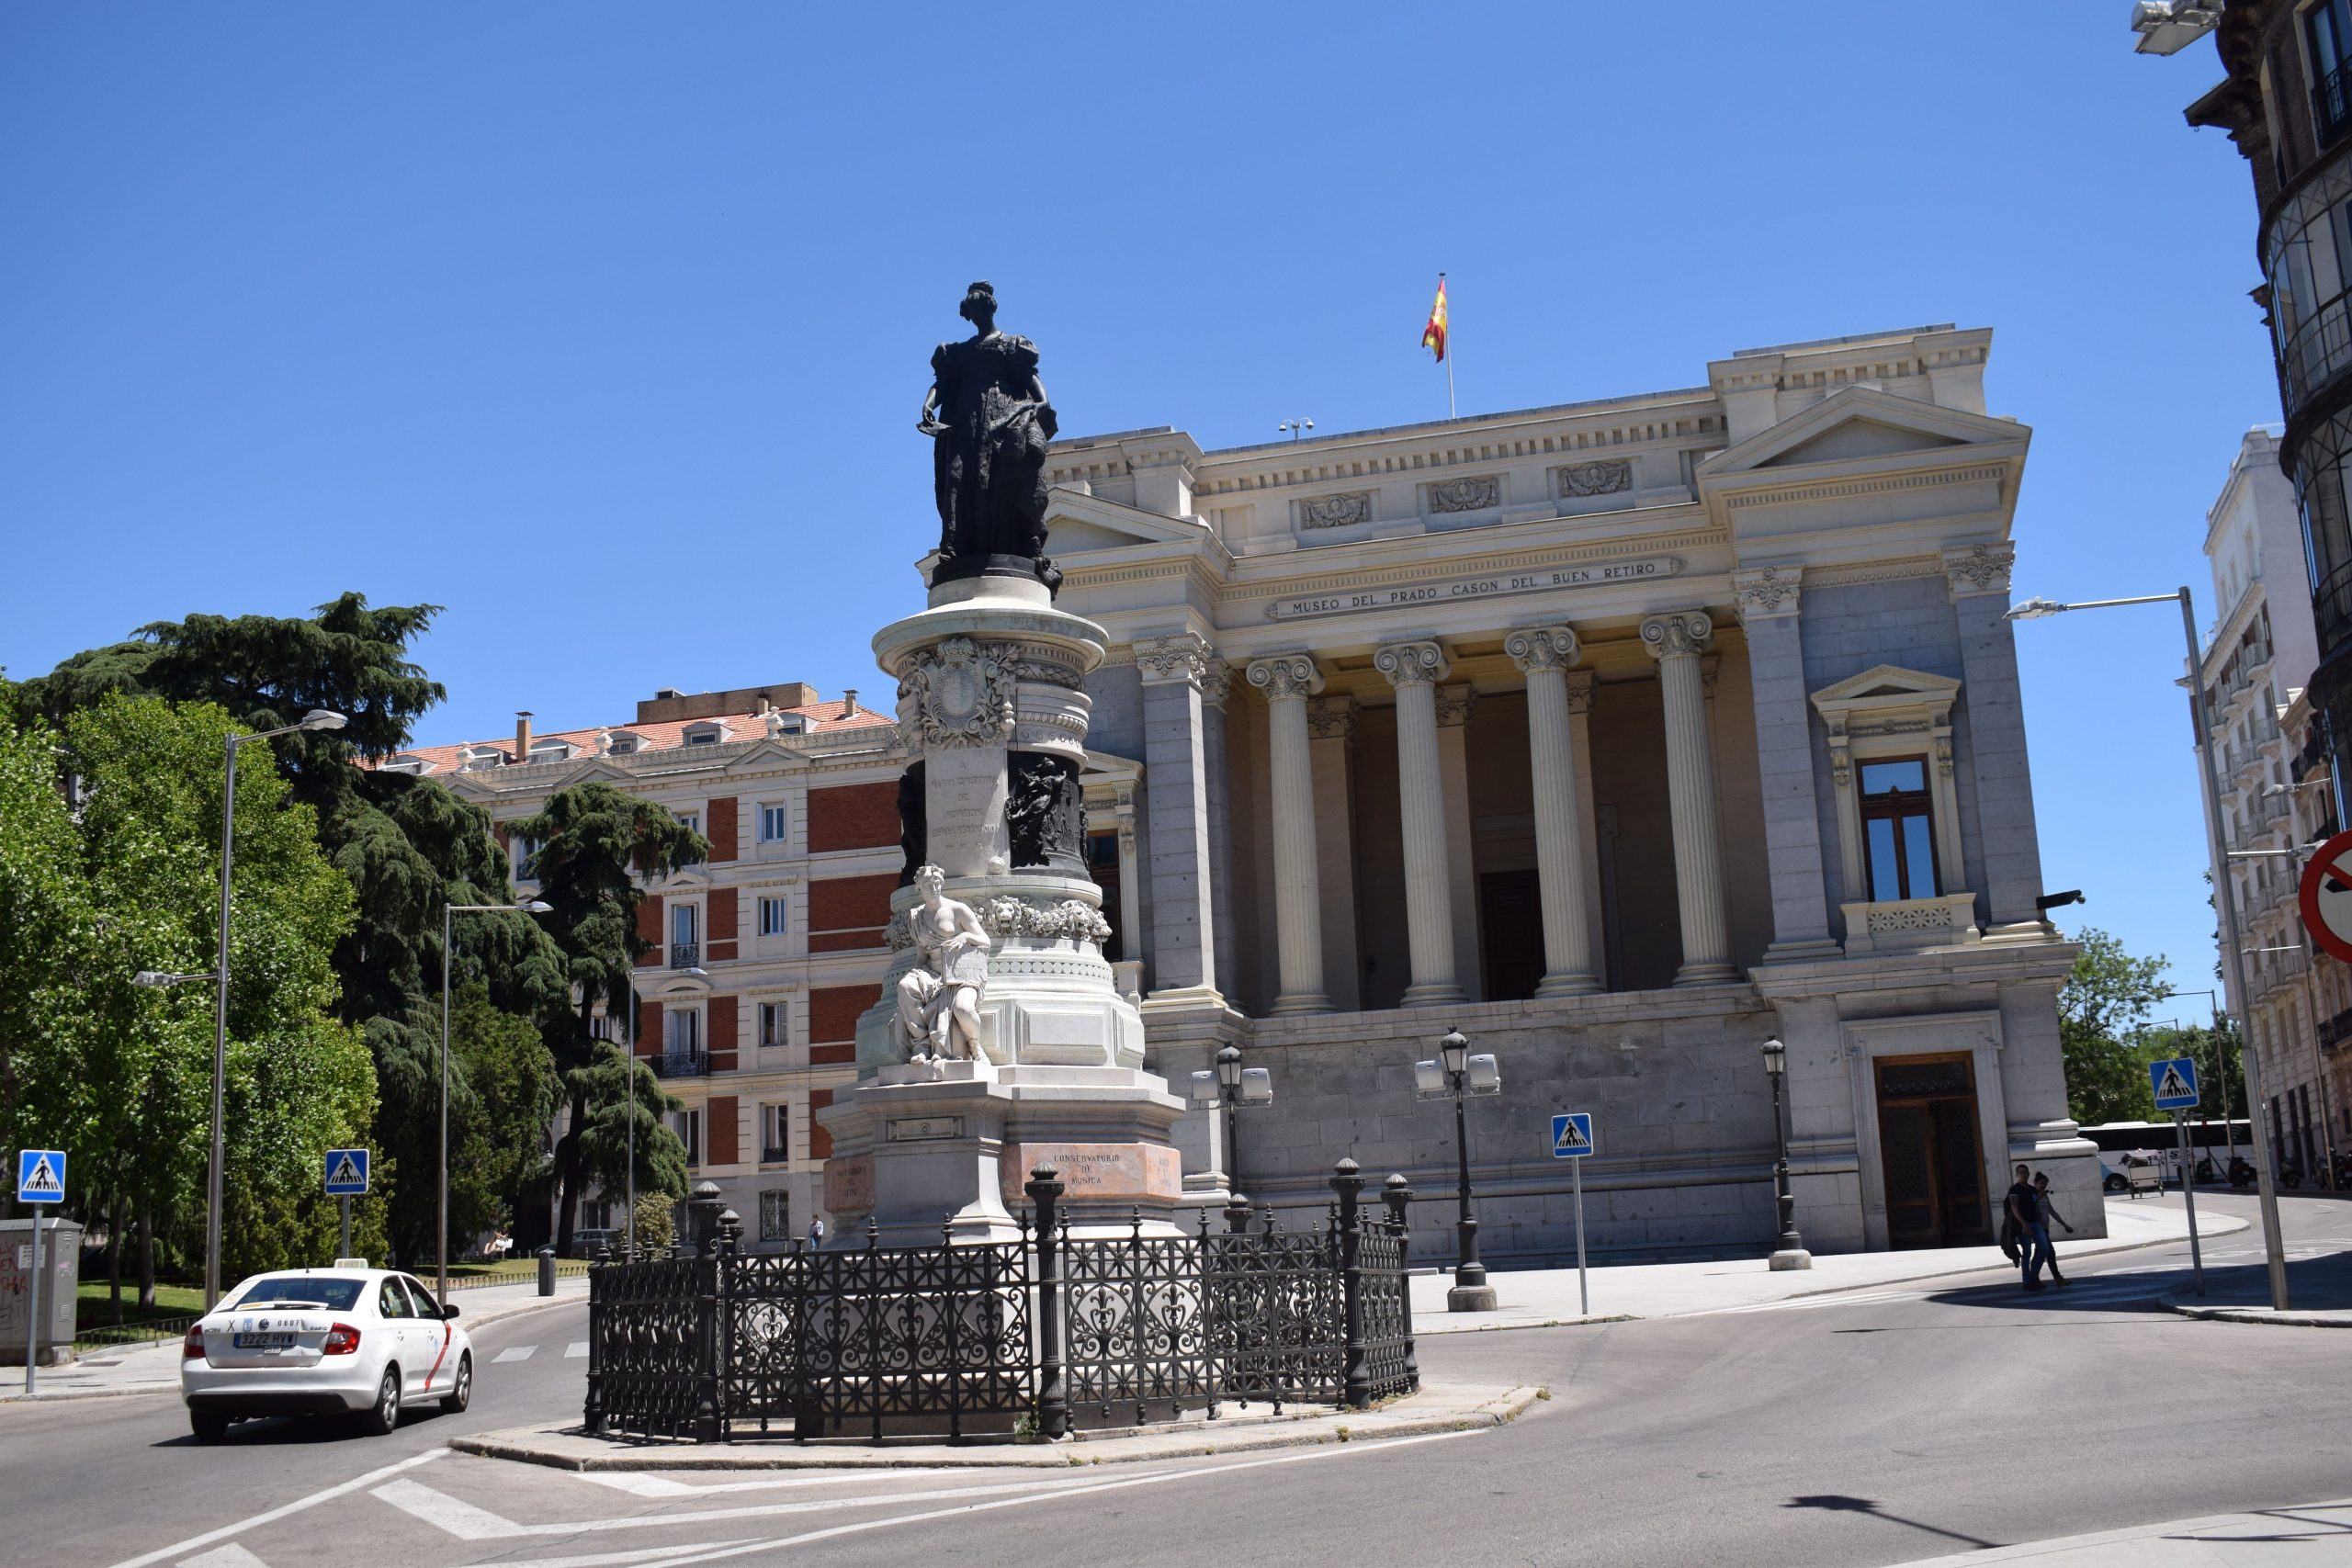 Madrid braces for partial lockdown as virus surges